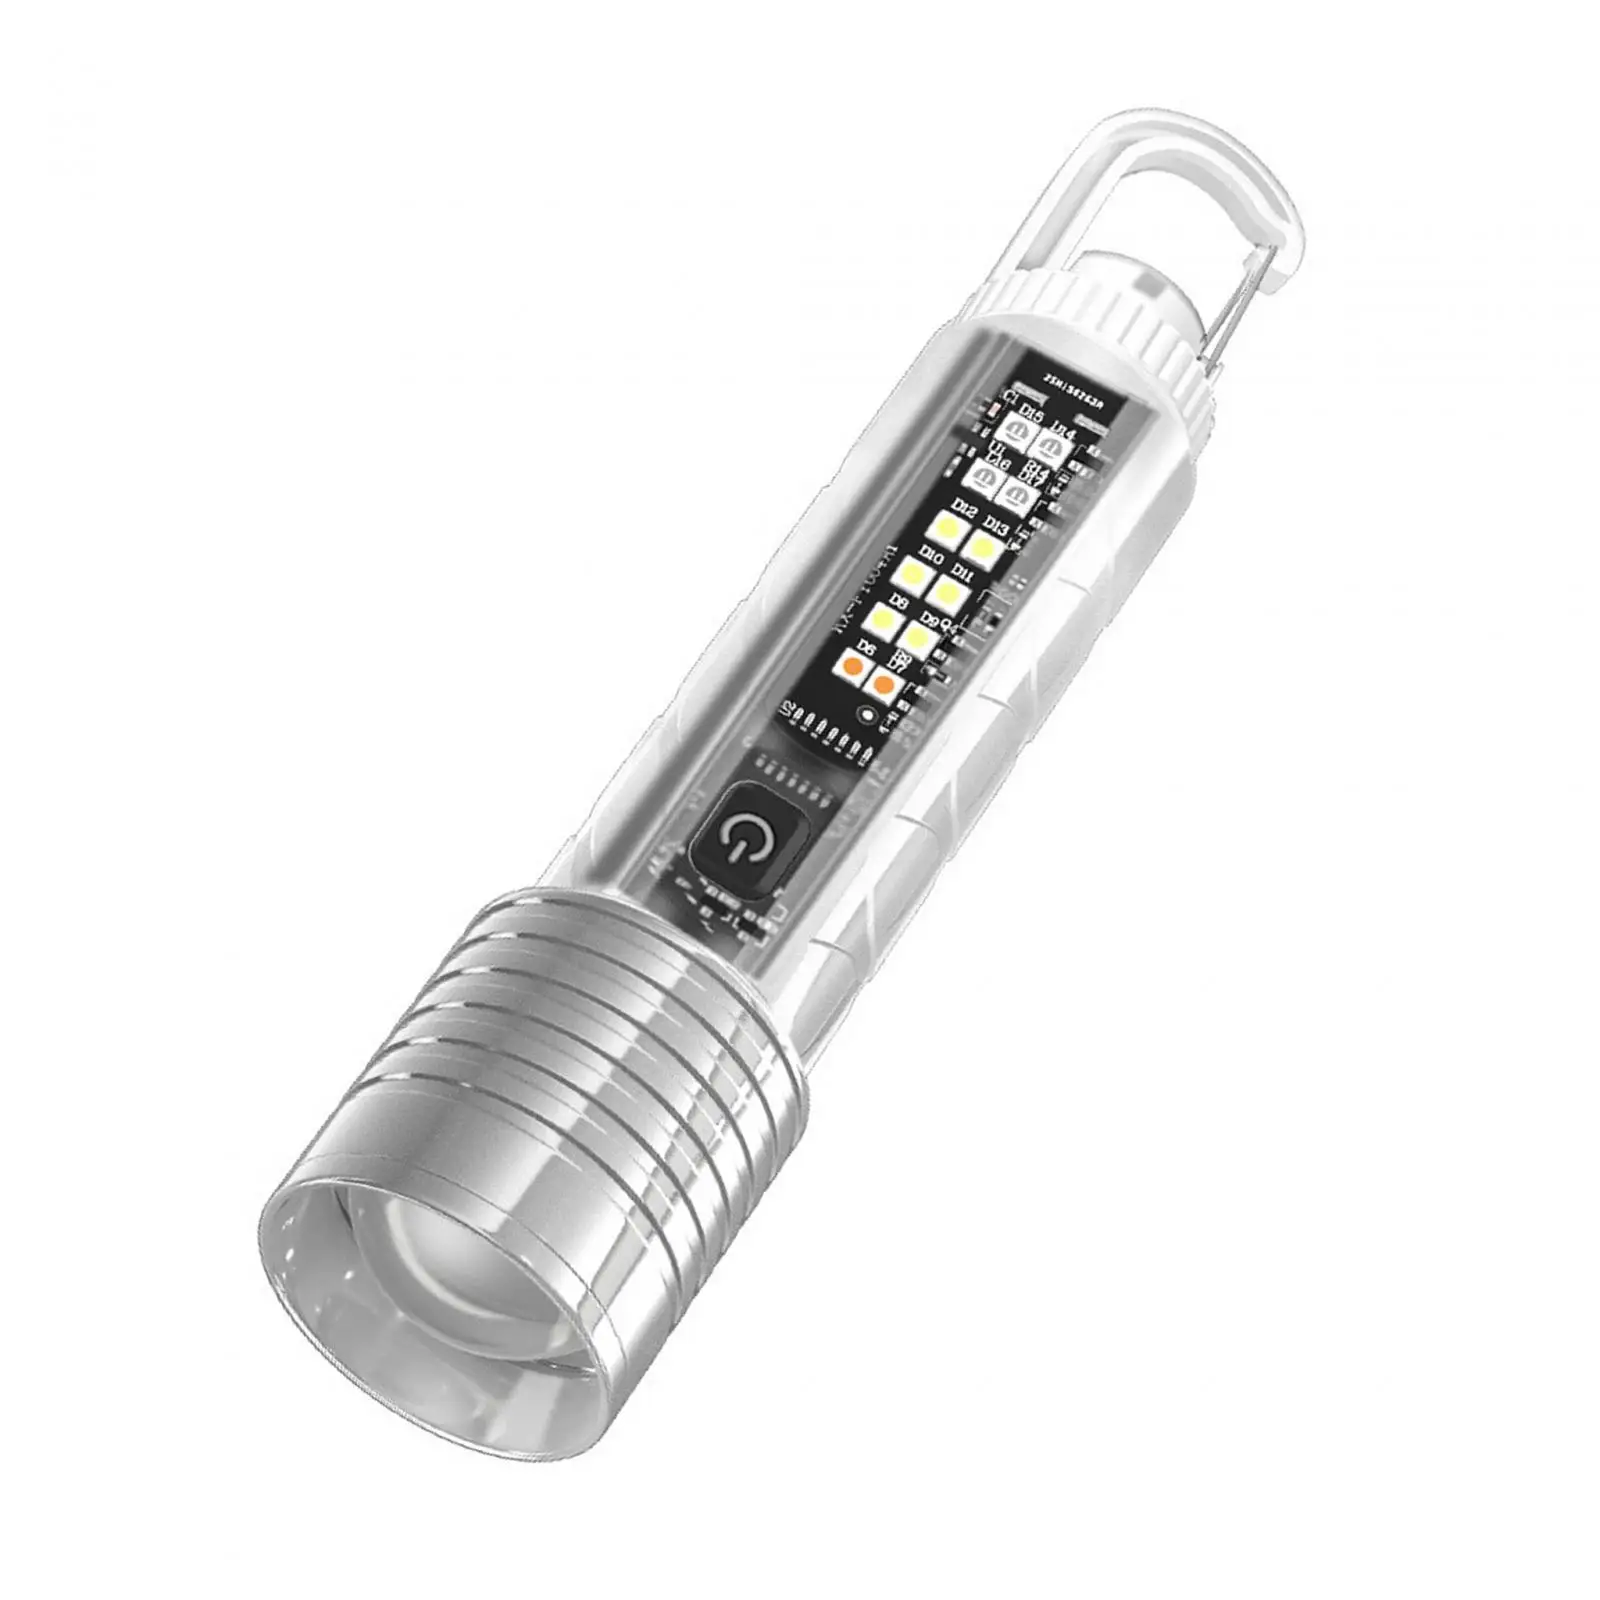 LED Lightweight Waterproof Portable Torch Handheld for Running Hiking Walking Backpacking Auto Repairing